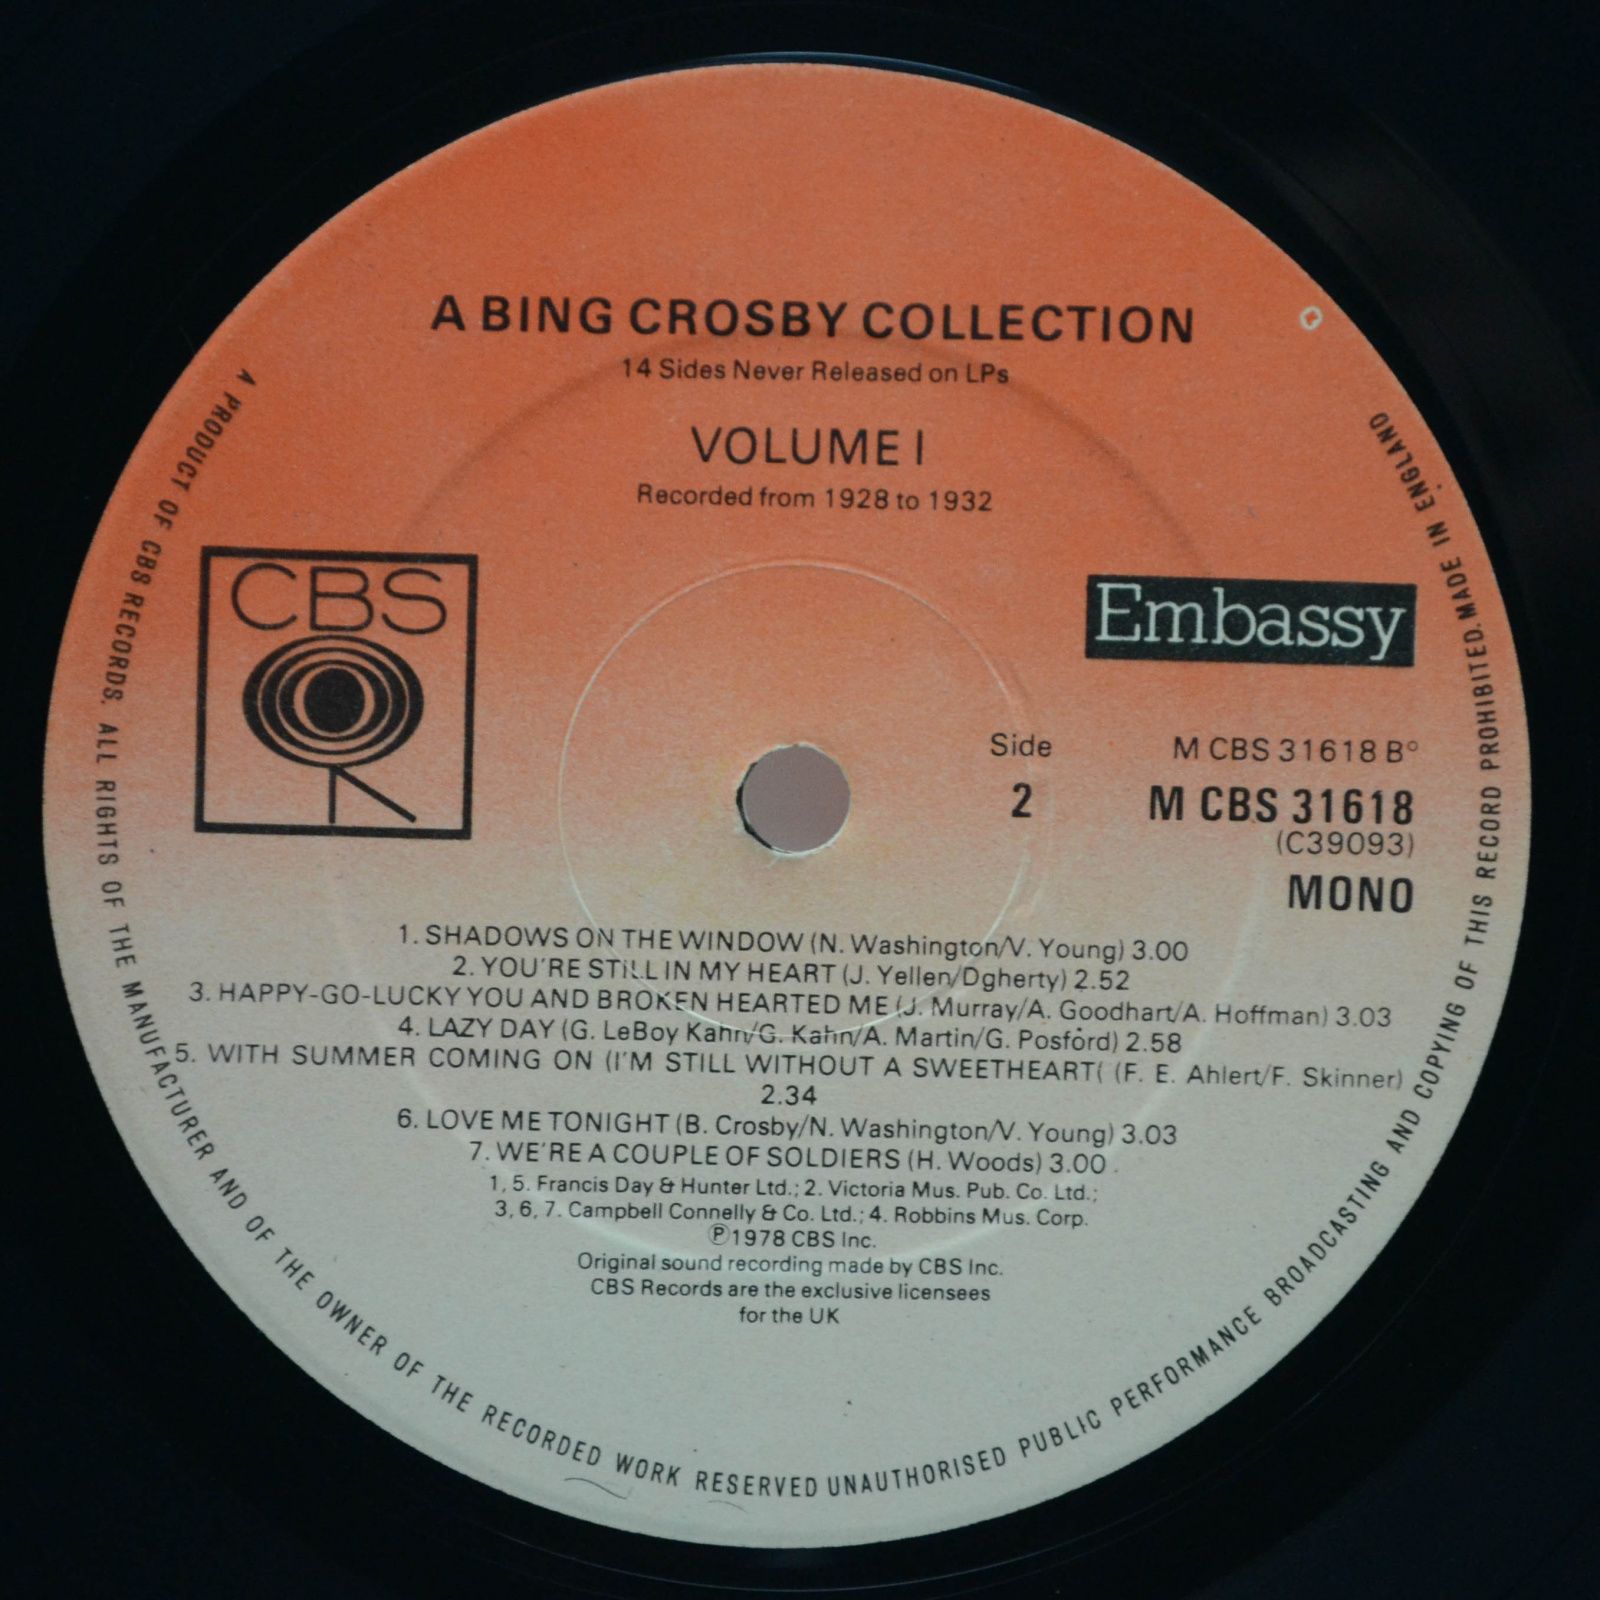 Bing Crosby — A Bing Crosby Collection - Volume I (UK), 1978